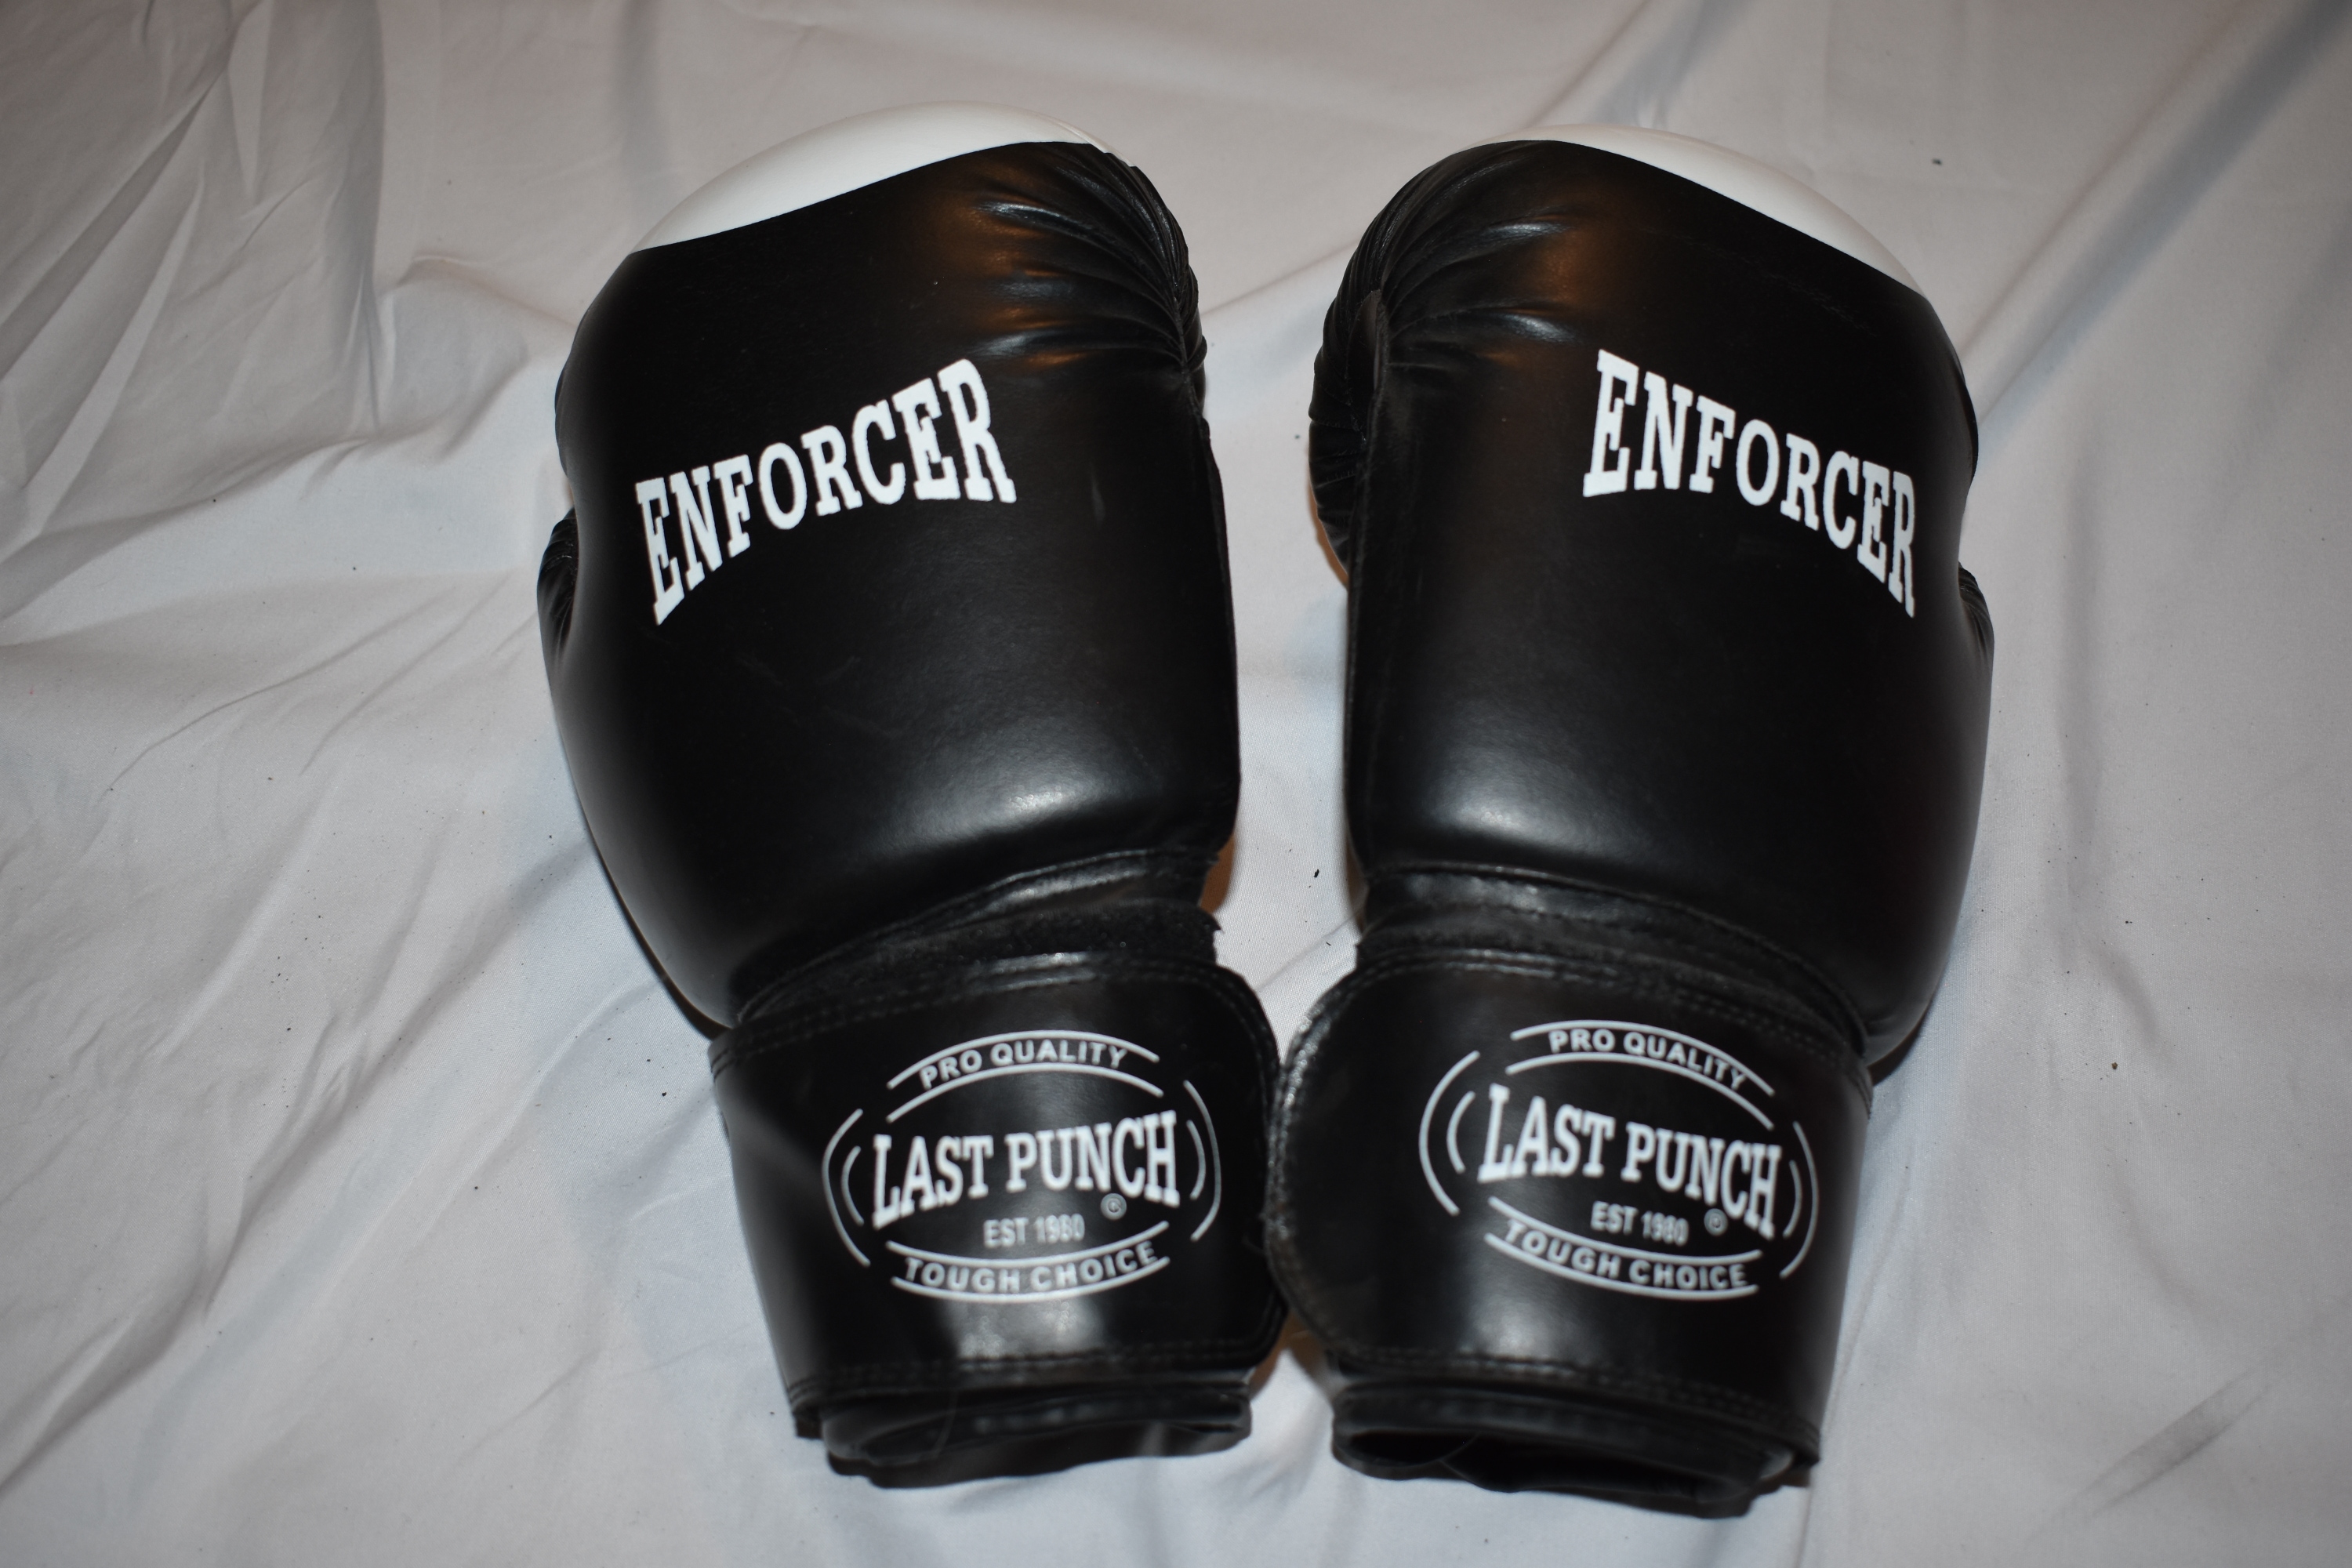 Last Punch Enforcer, Red/White, 16oz Gloves